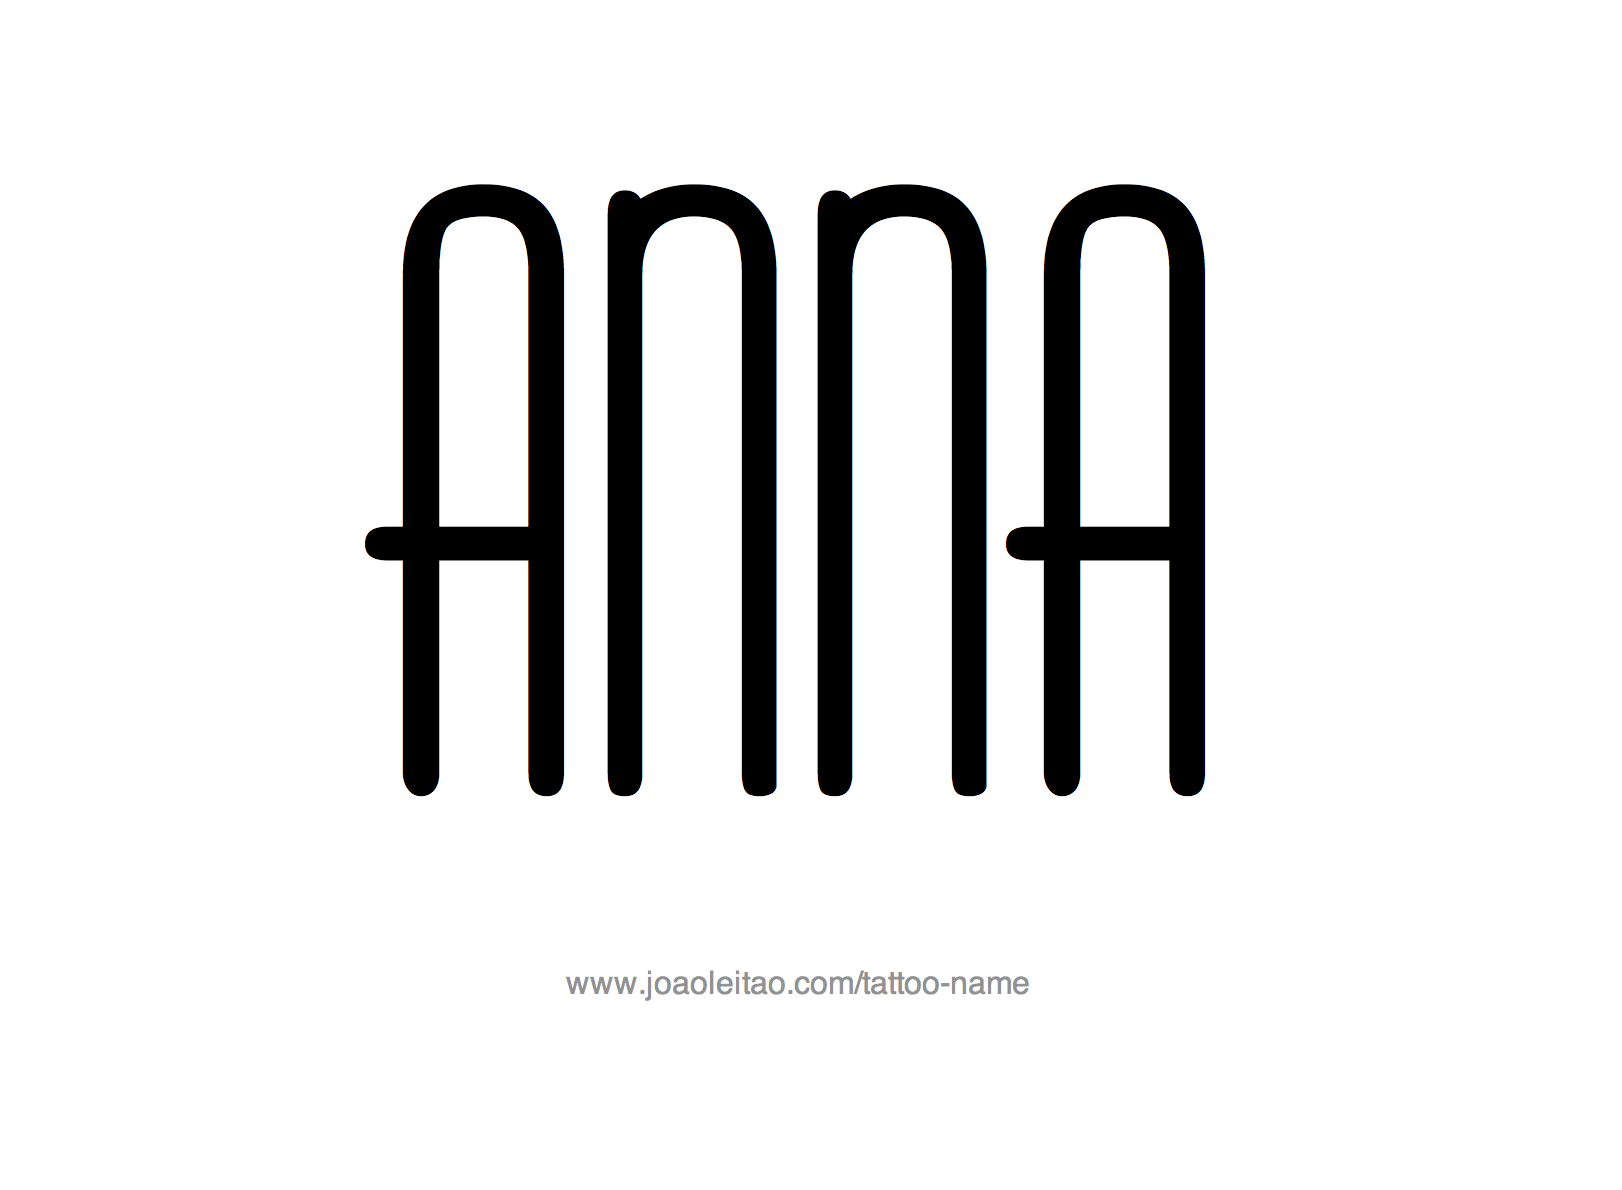 Tattoo Design Name Anna 